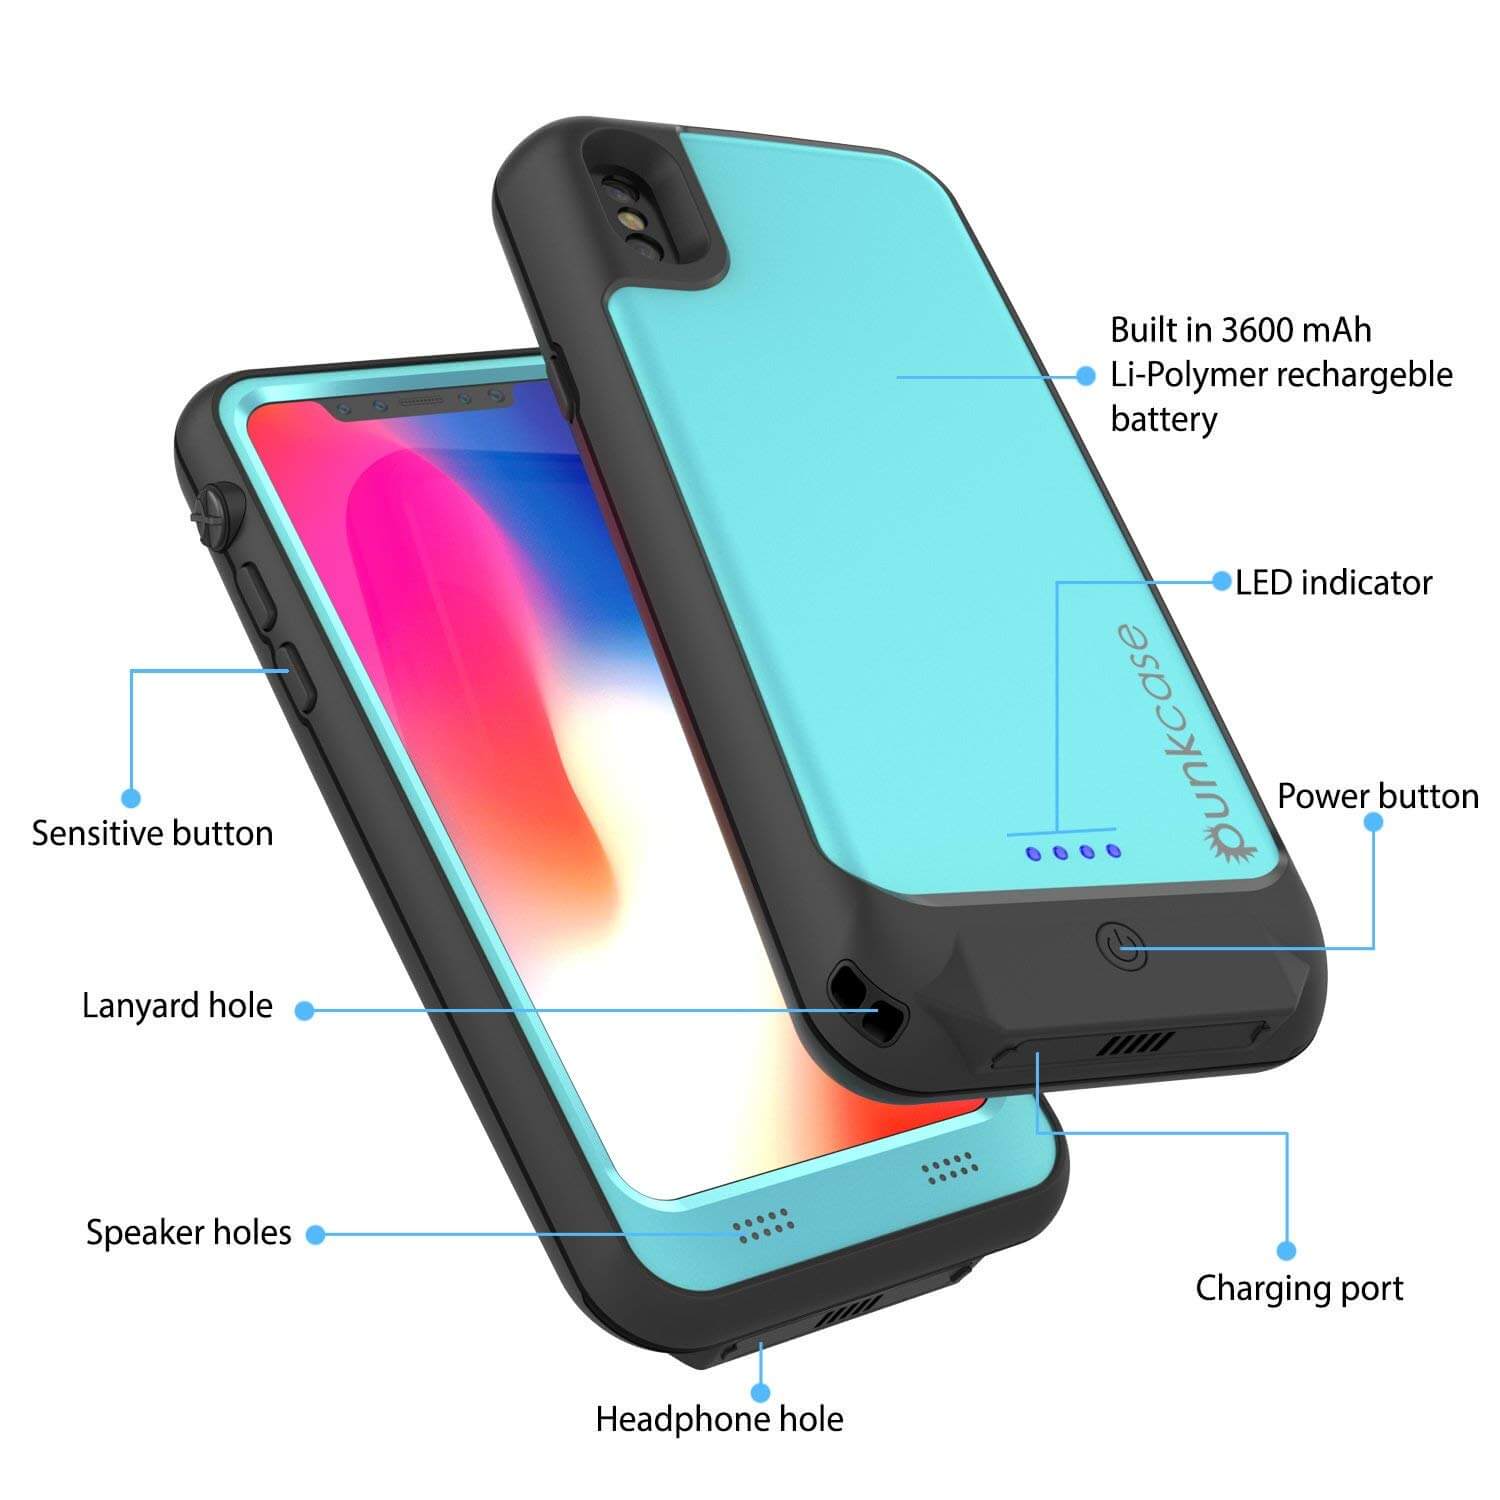 PunkJuice iPhone X Battery Case, Waterproof, IP68 Certified [Ultra Slim] [Teal]